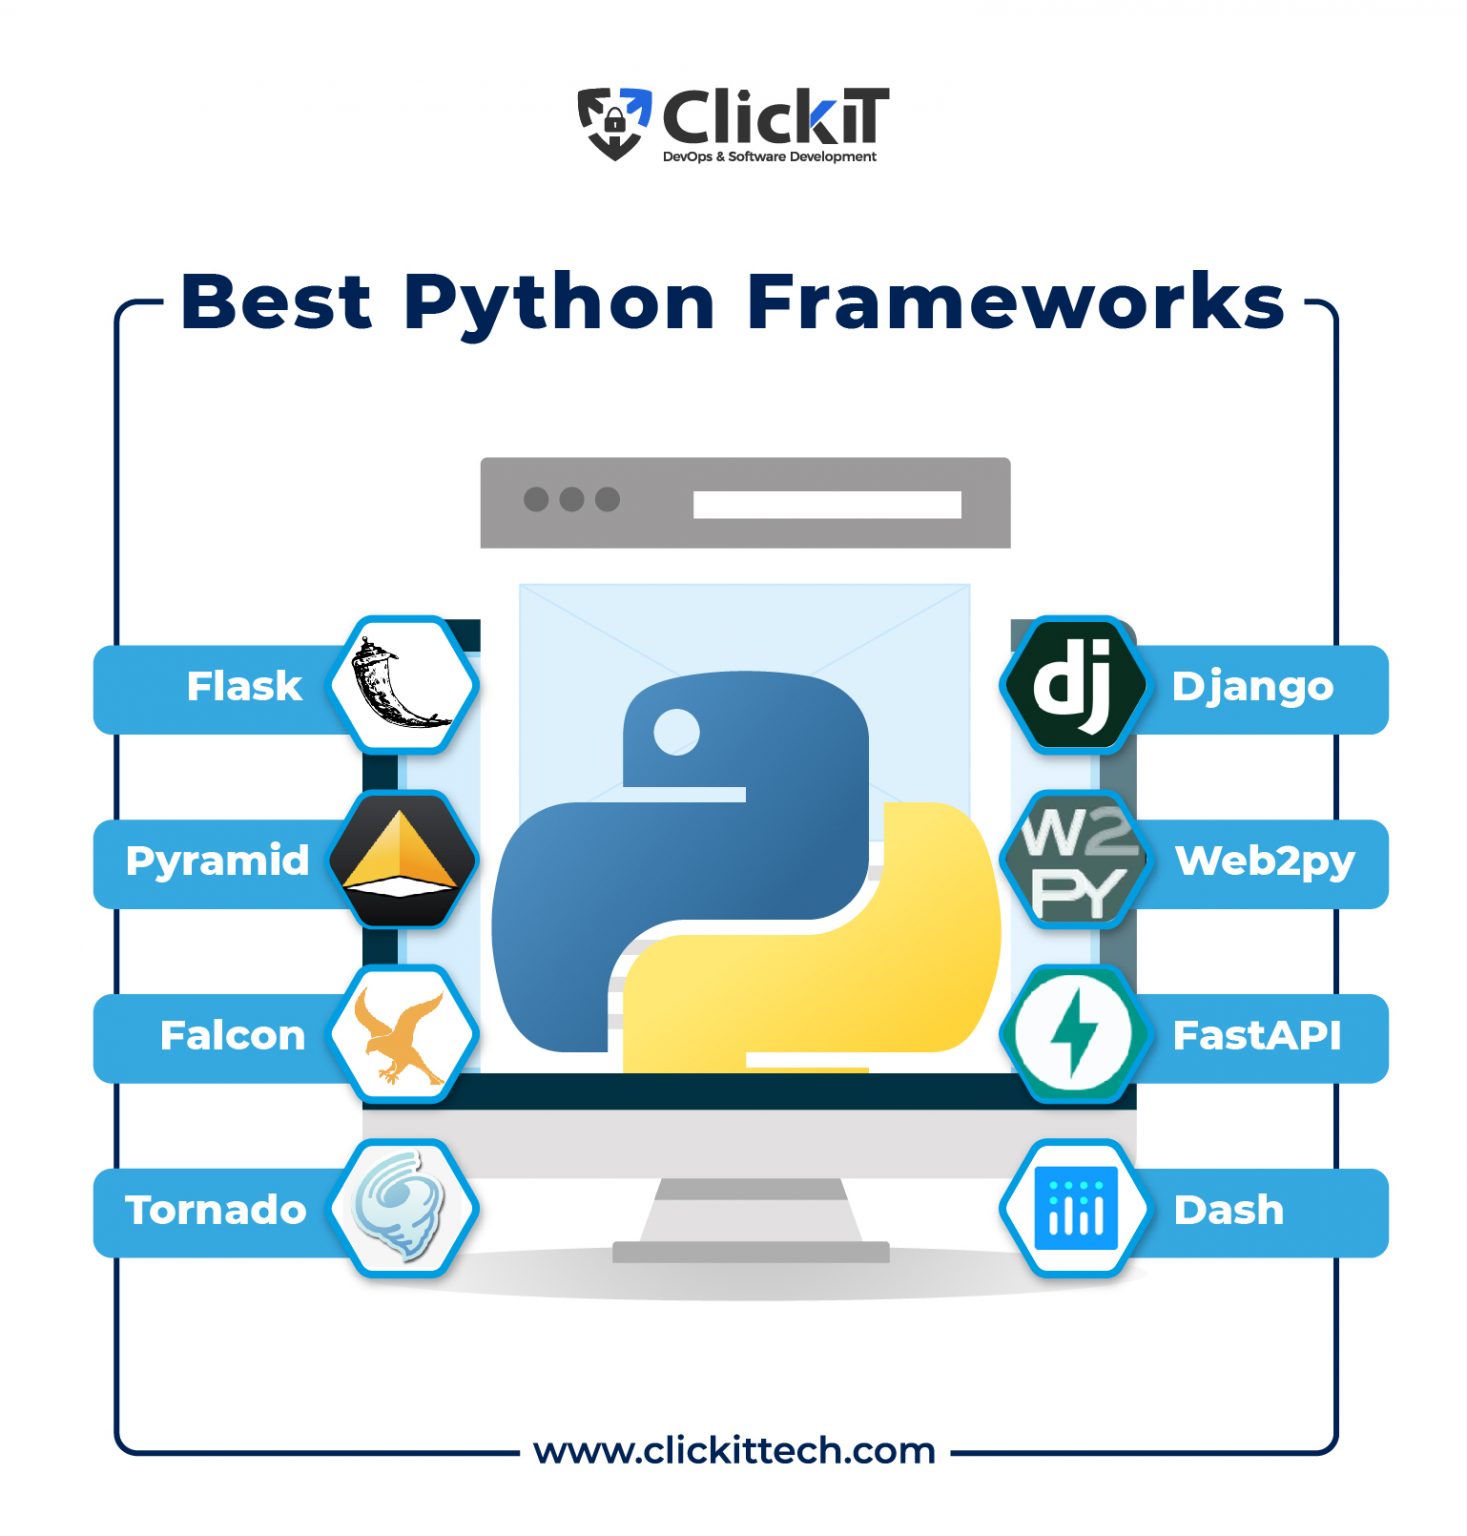 Python Frameworks The Best for Web Applications